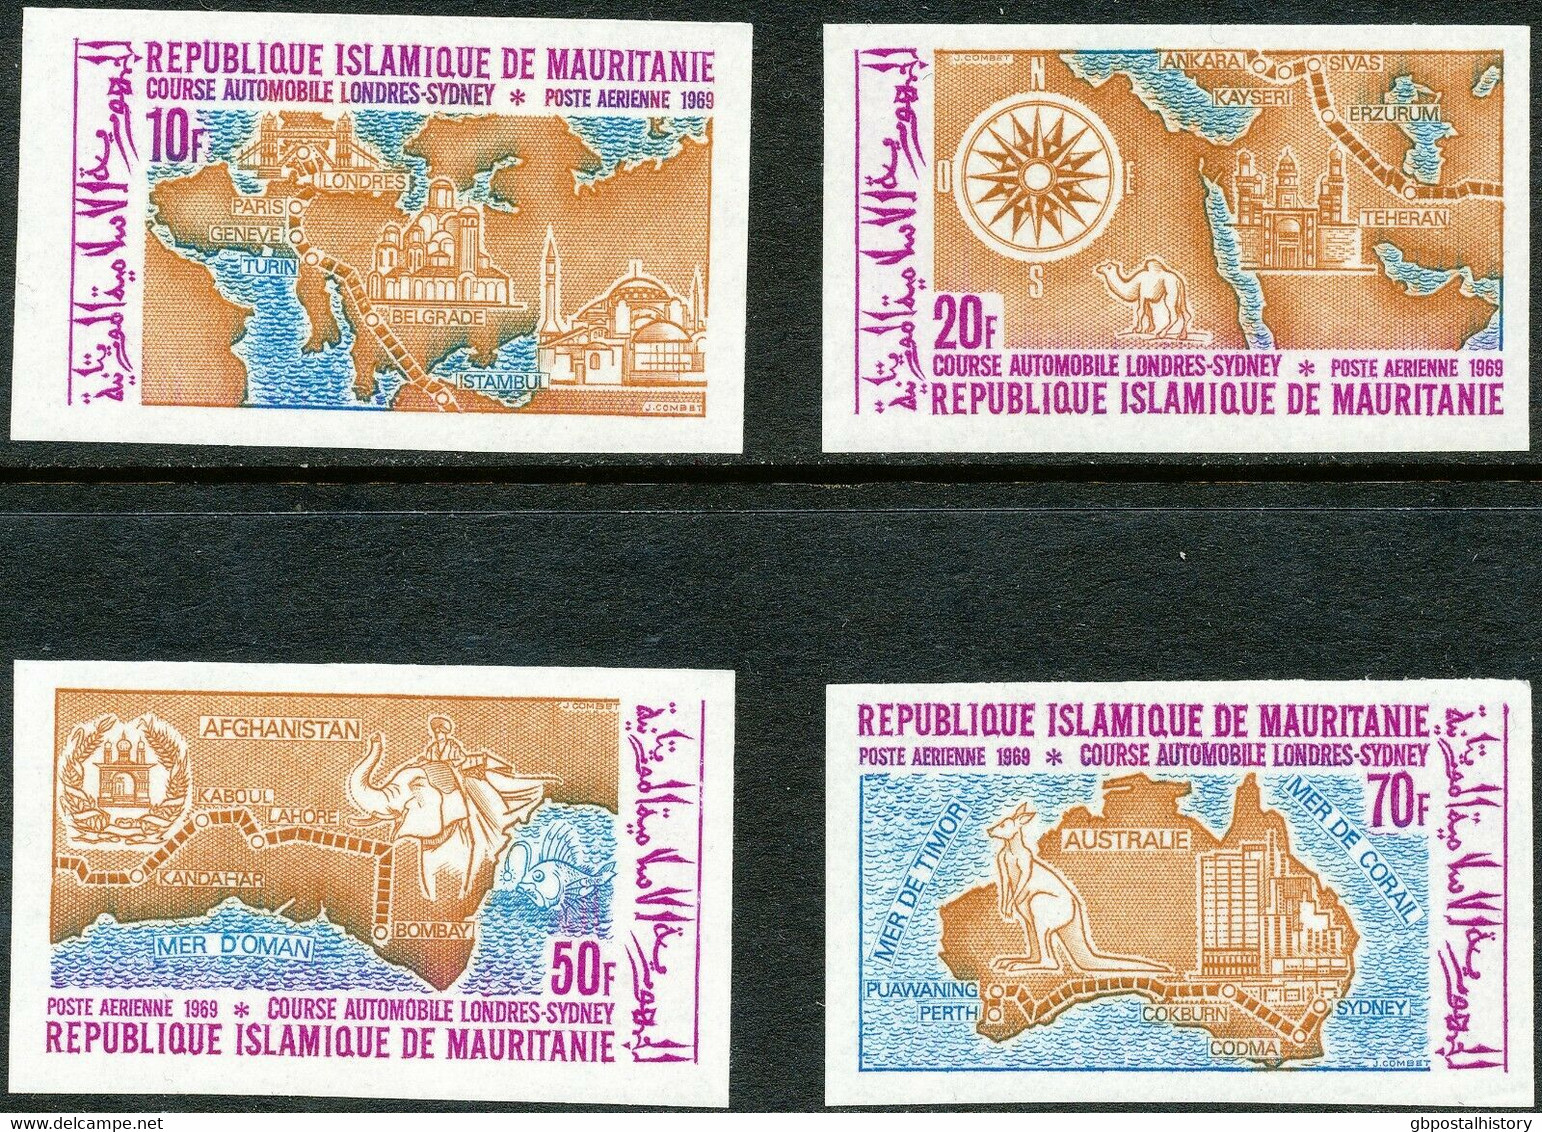 MAURETANIEN 1969 Transkontinentale Autorallye London-Sydney U/M Set IMPERFORATED - Mauritanie (1960-...)